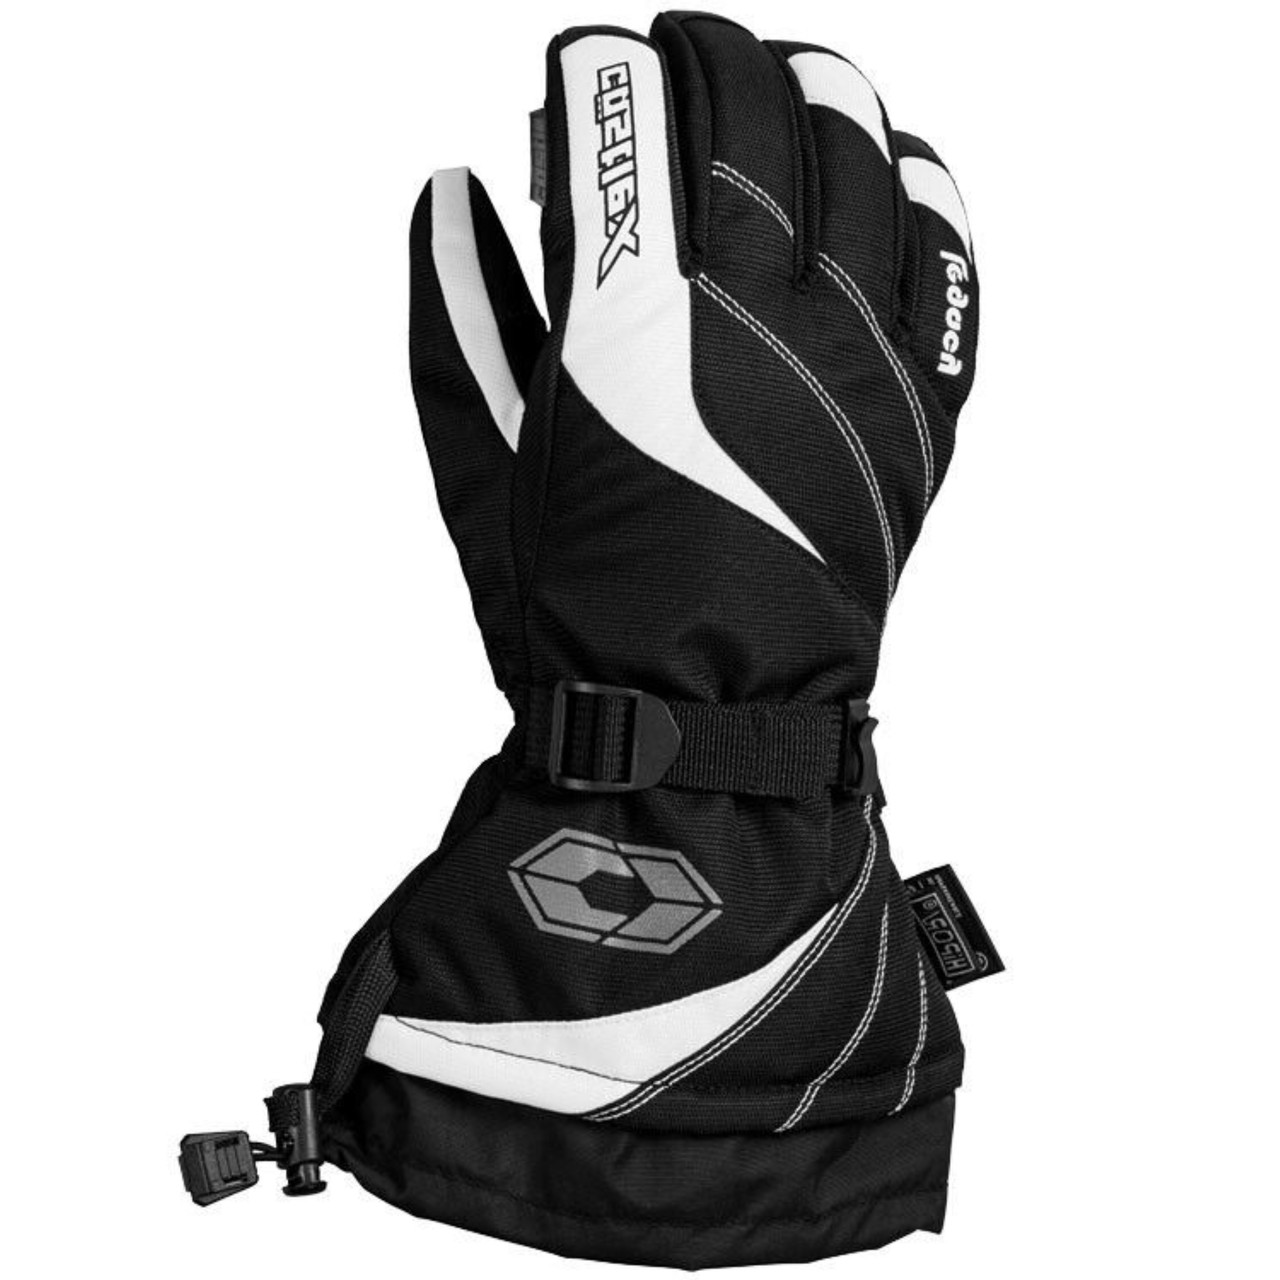 Castle X New Women's White/Black X-Large Legacy G2 Gloves, 74-6508